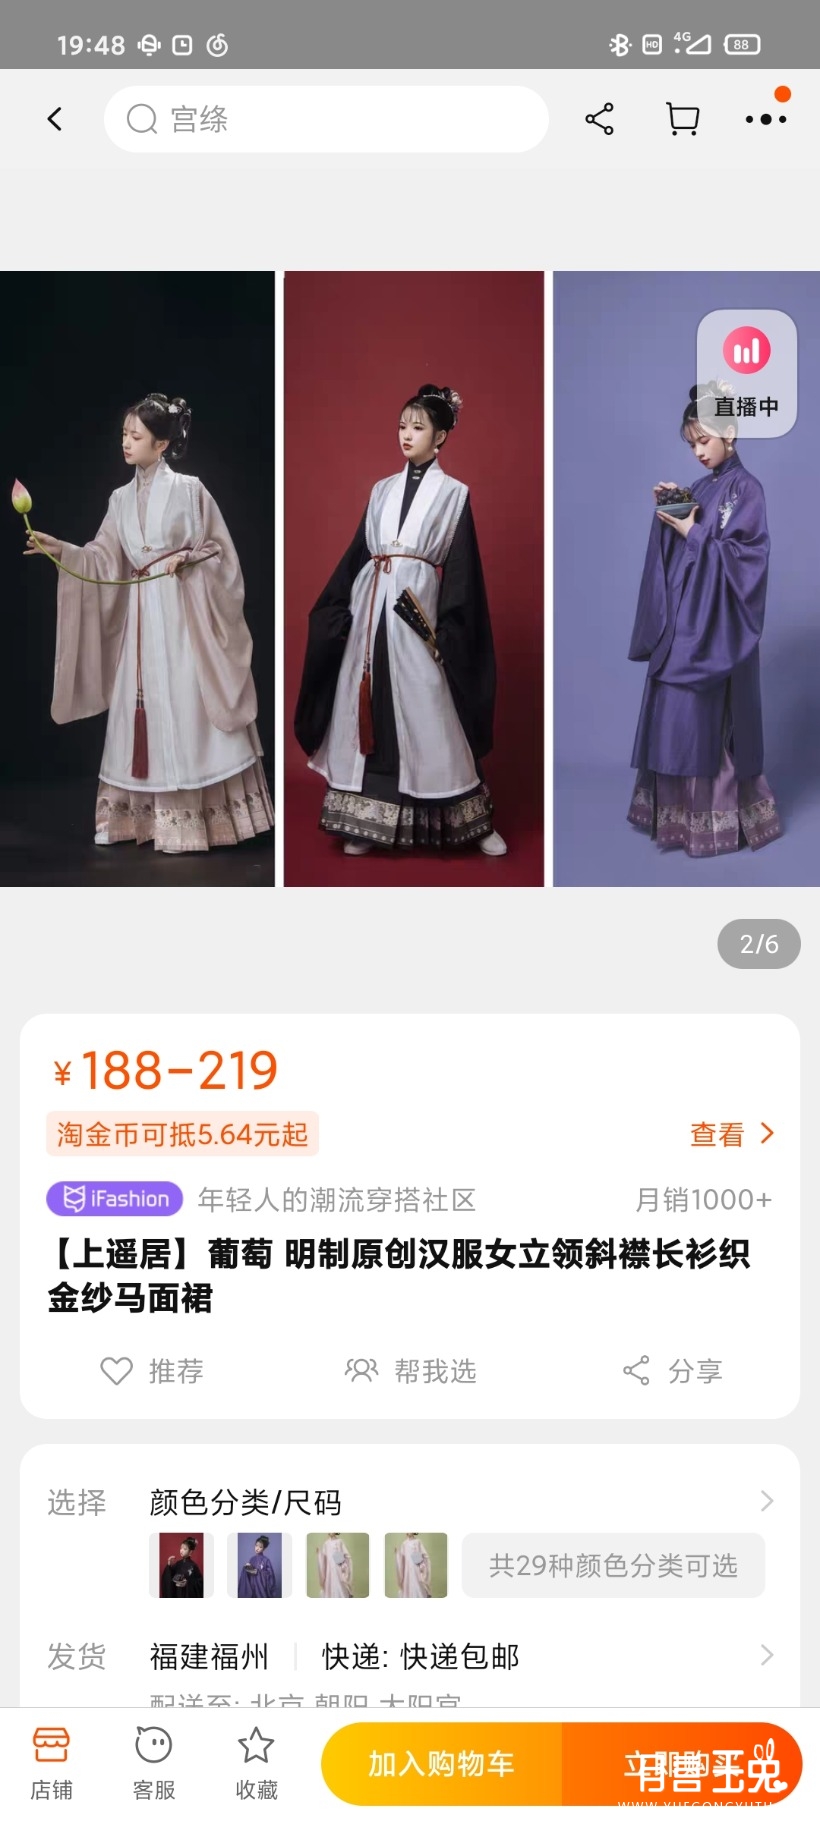 Screenshot_2021-03-31-19-48-50-590_com.taobao.taobao.jpg